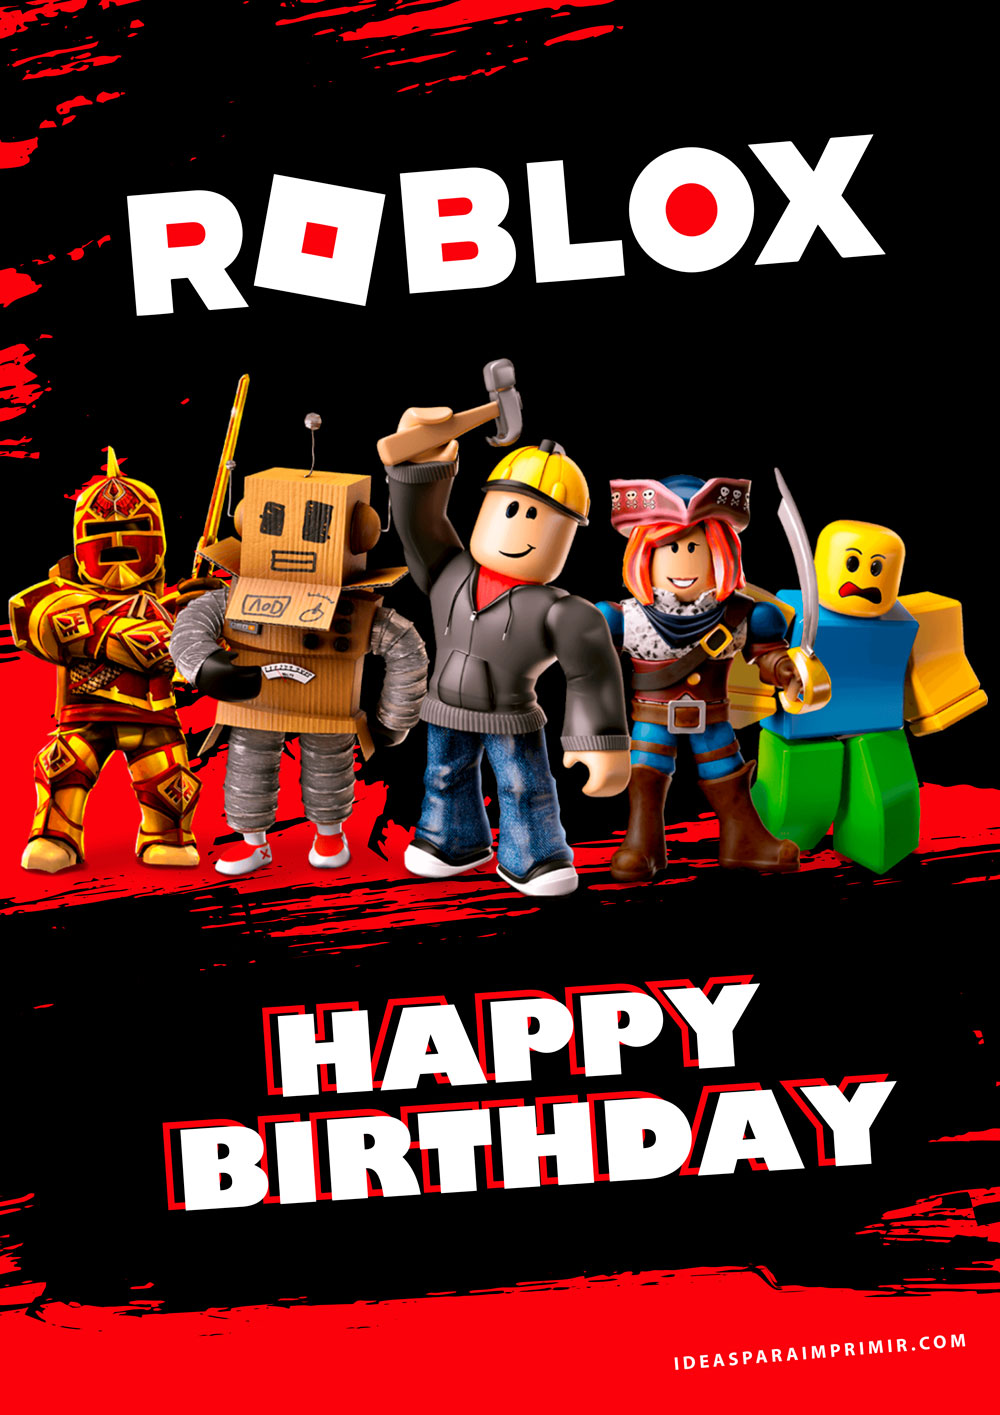 Roblox Happy Birthday Poster